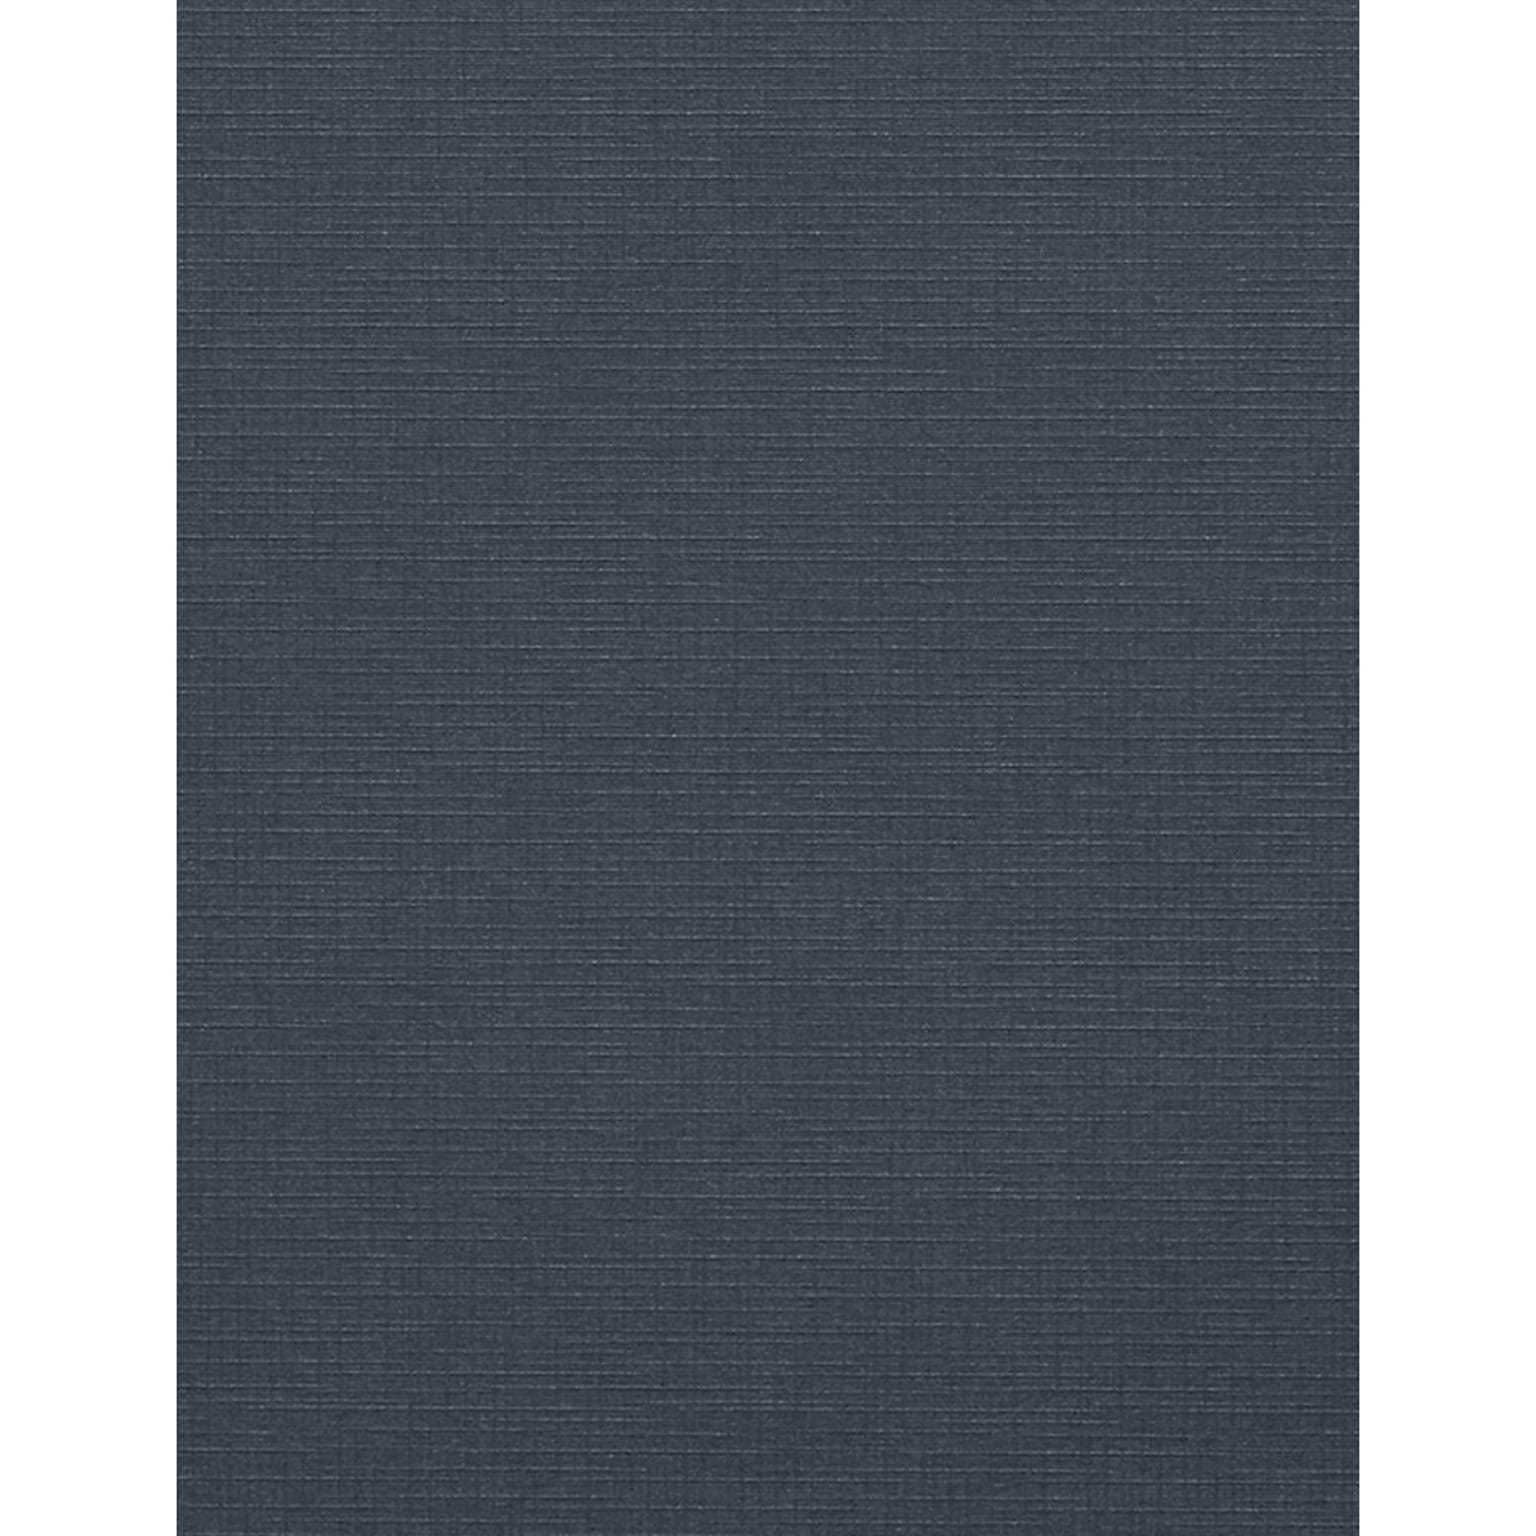 JAM PAPER 8.5 x 11 Cardstock, Nautical Blue Linen, 50/pack  (81211-C-BULI-50)